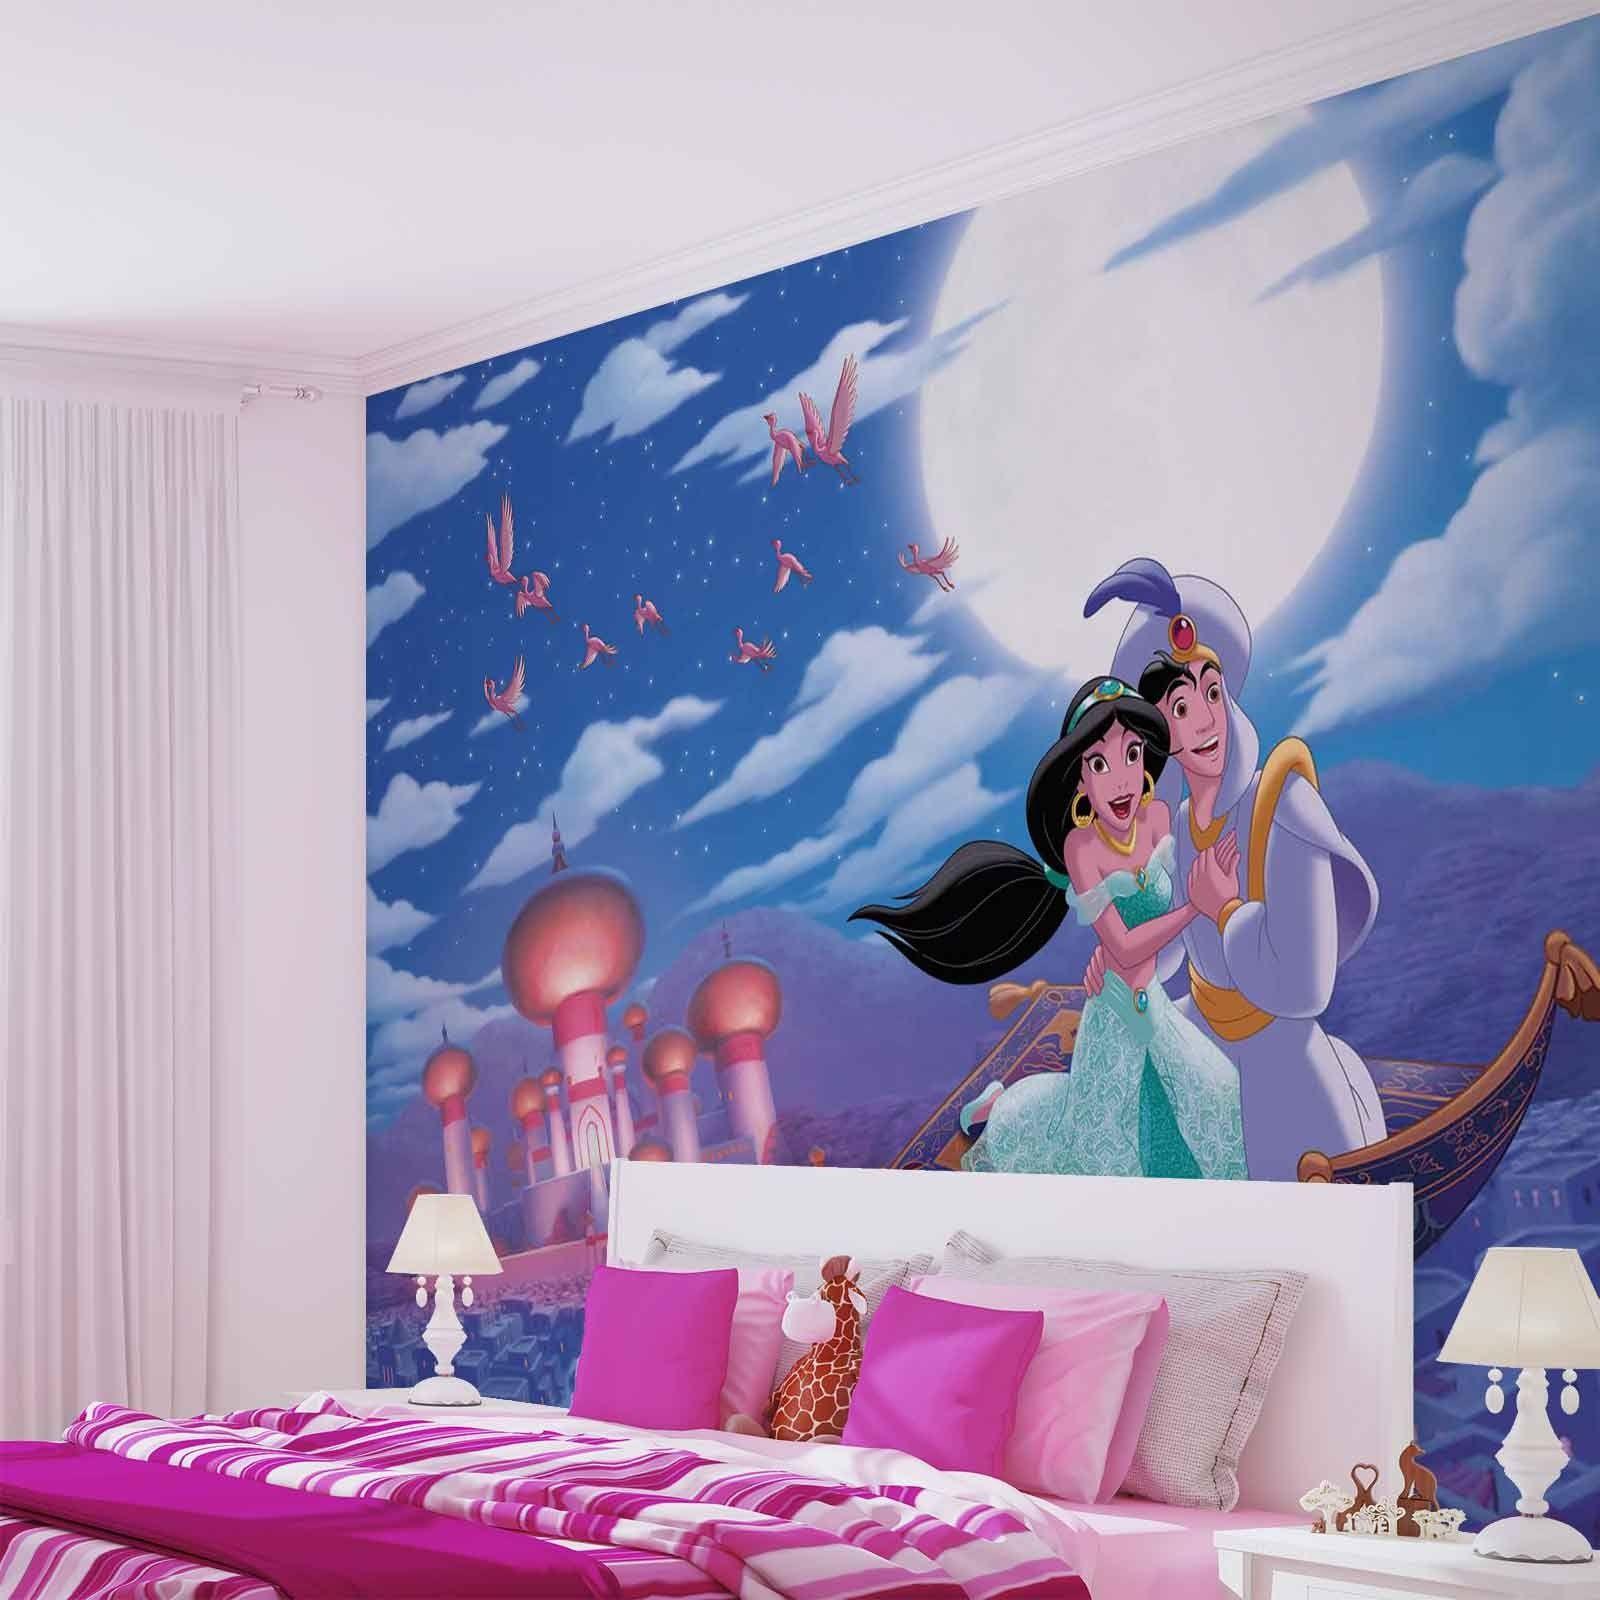 Disney Princesses Jasmine Aladdin Photo Wallpaper Mural 2449WM